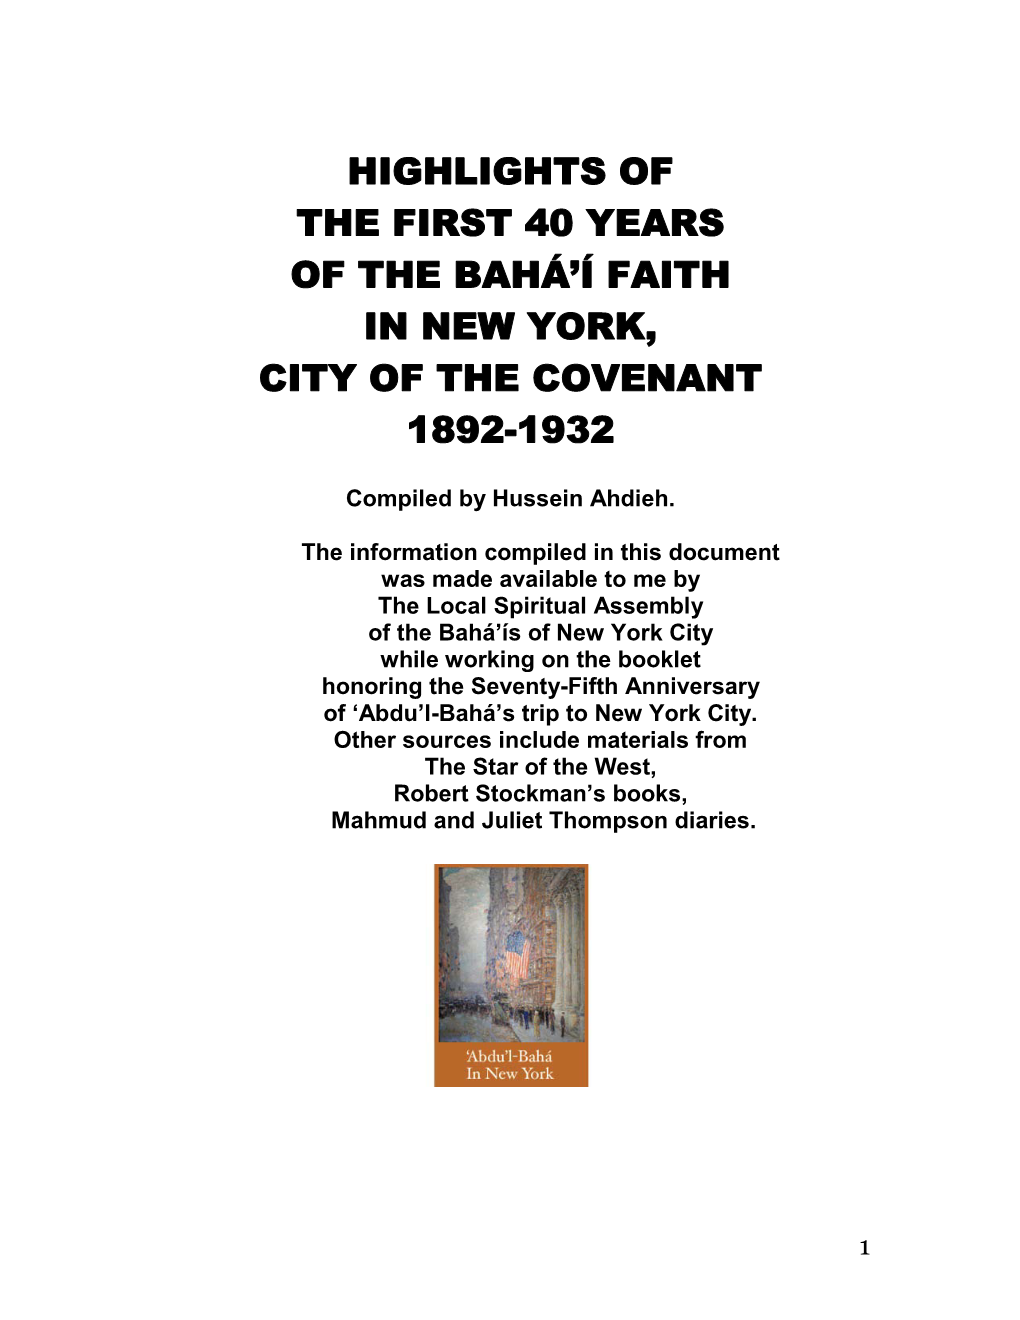 Highlights of the First 40 Years of the Bahá'í Faith in New York, City of The